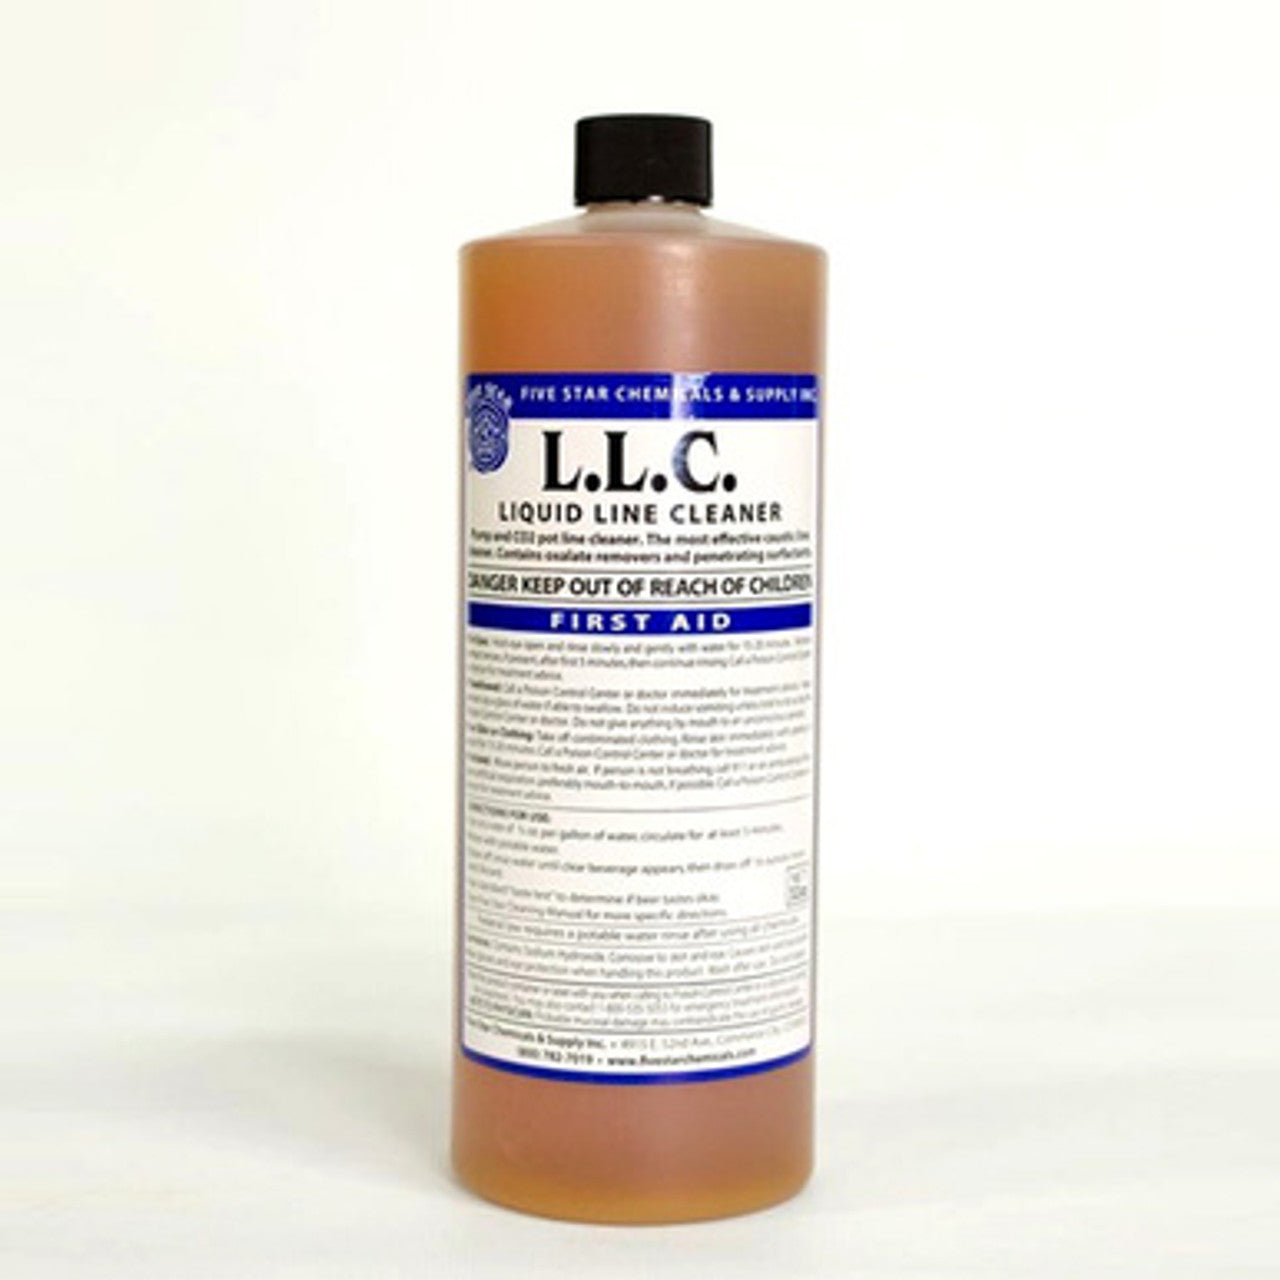 Liquid Line Cleaner (L.L.C) - 32oz (946) - All Things Fermented | Home Brew Shop NZ | Supplies | Equipment